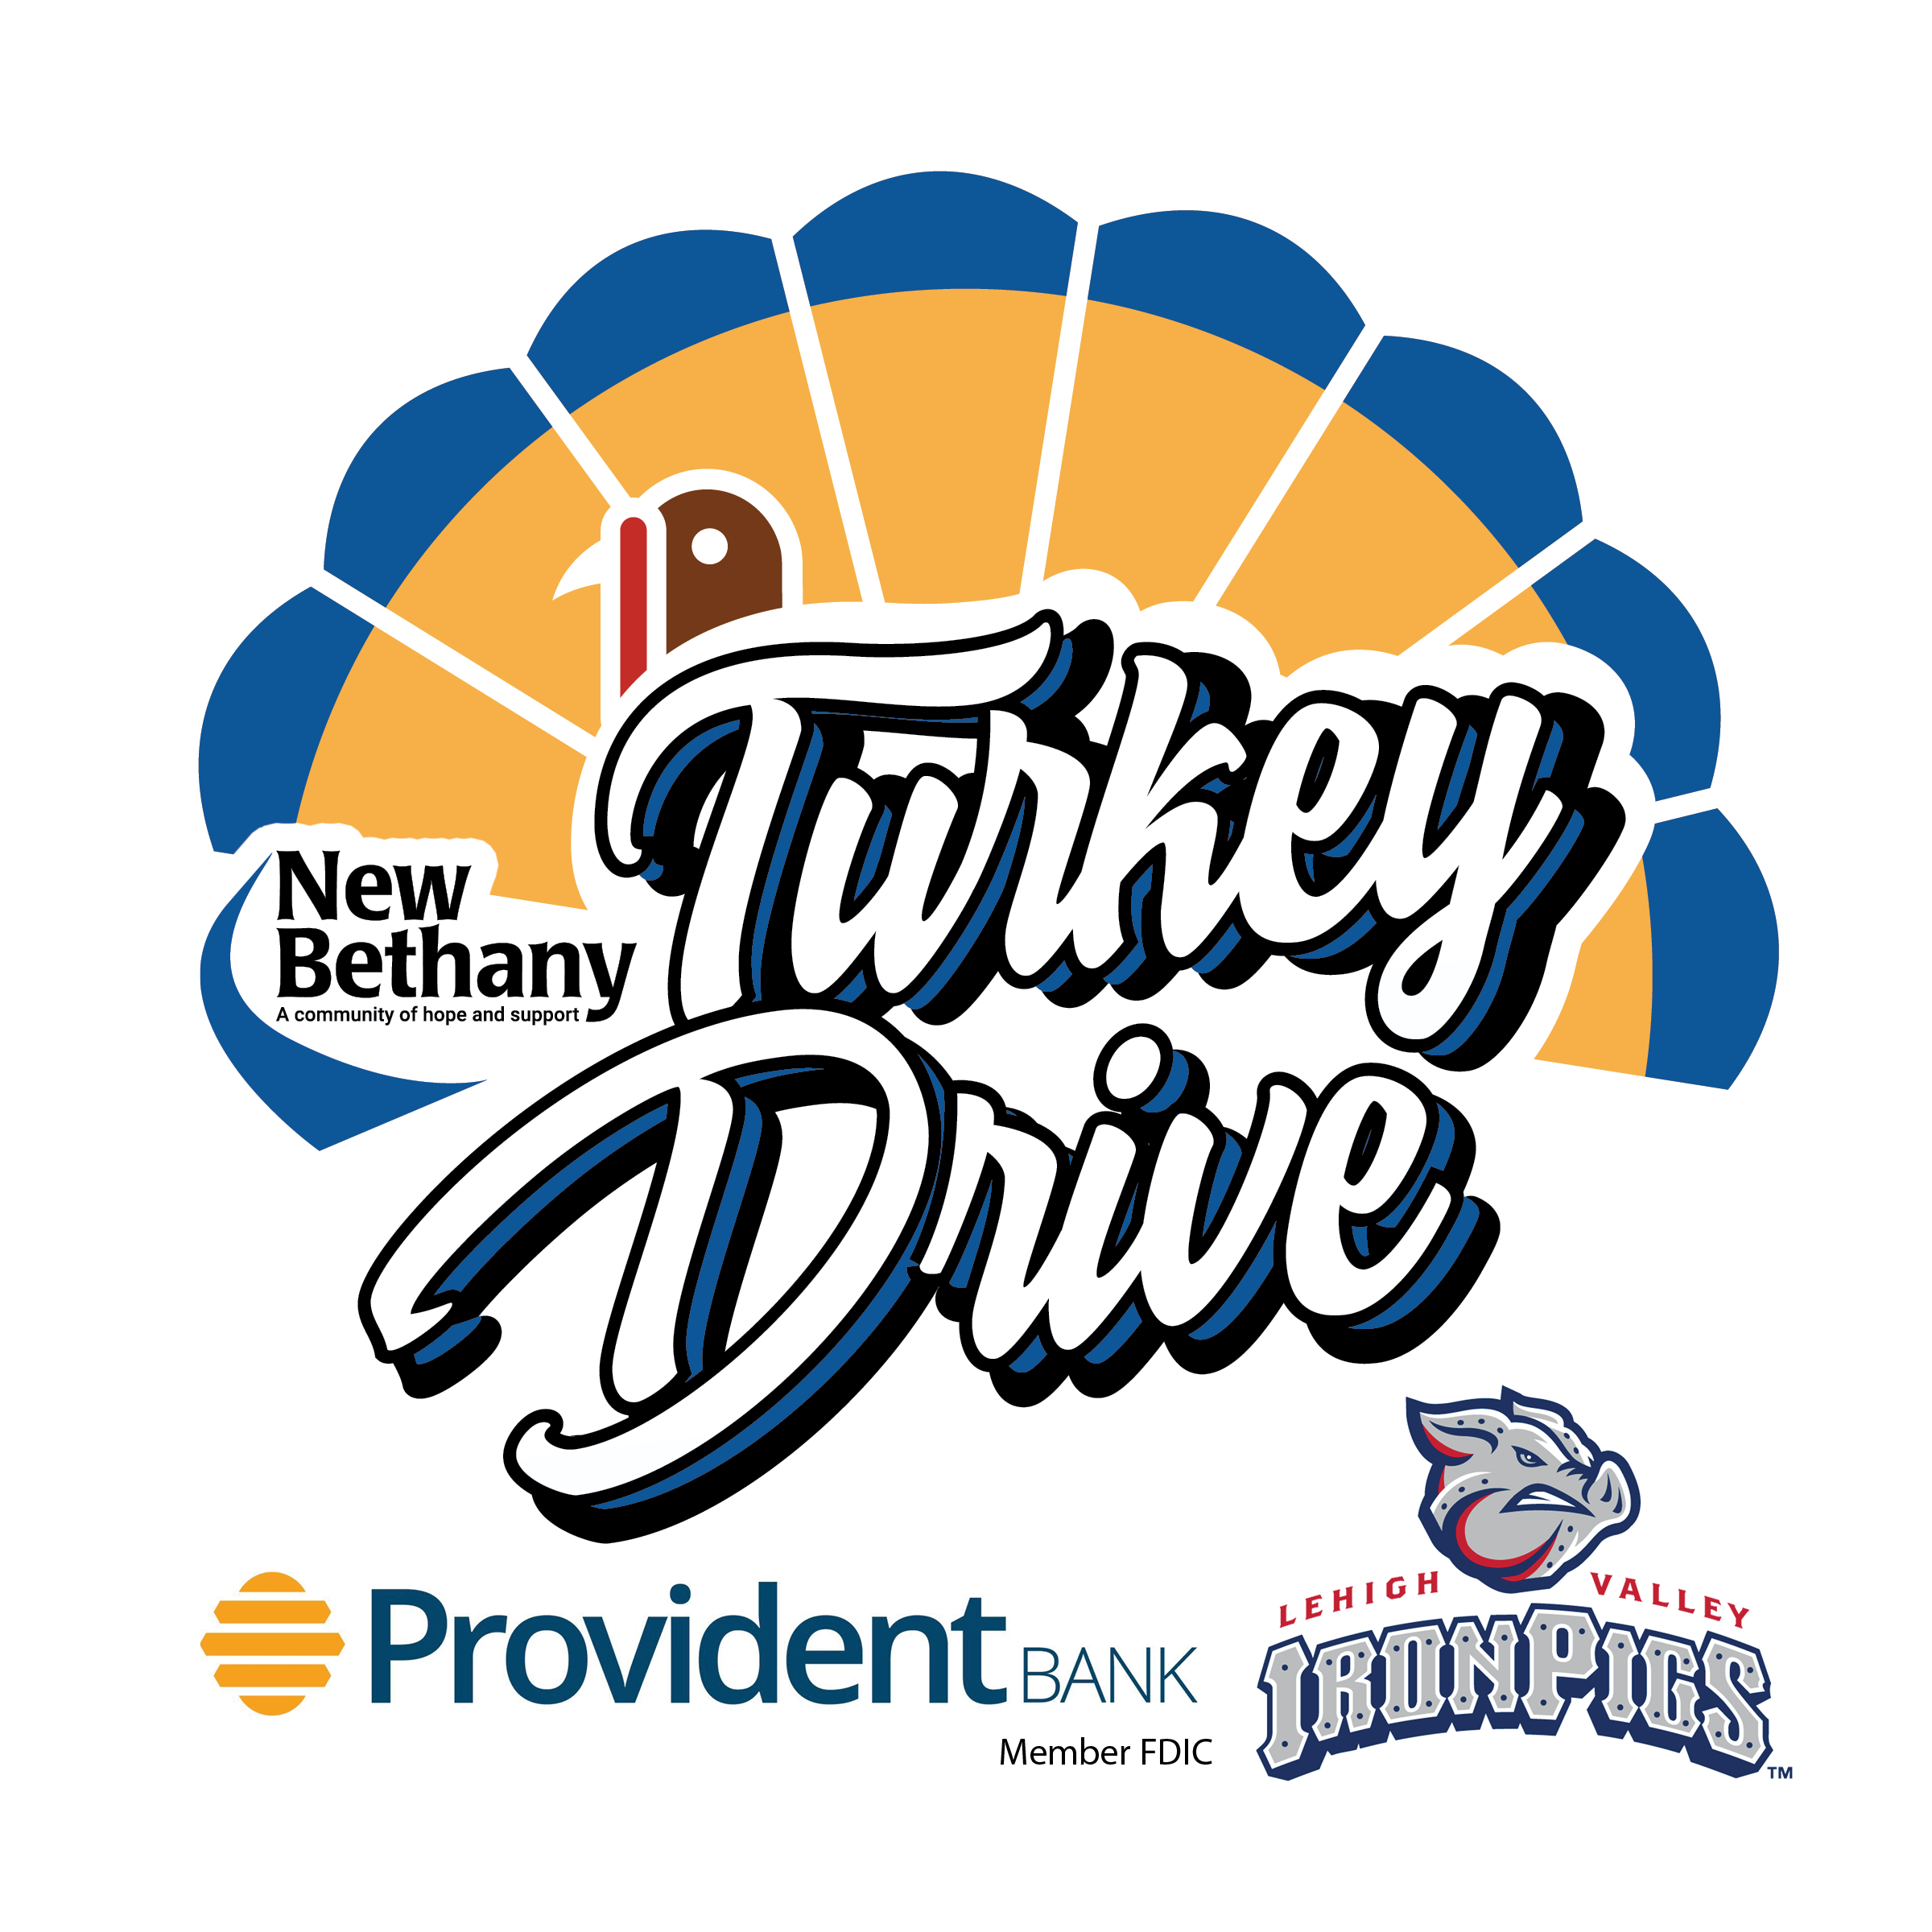 Turkey Drive logo